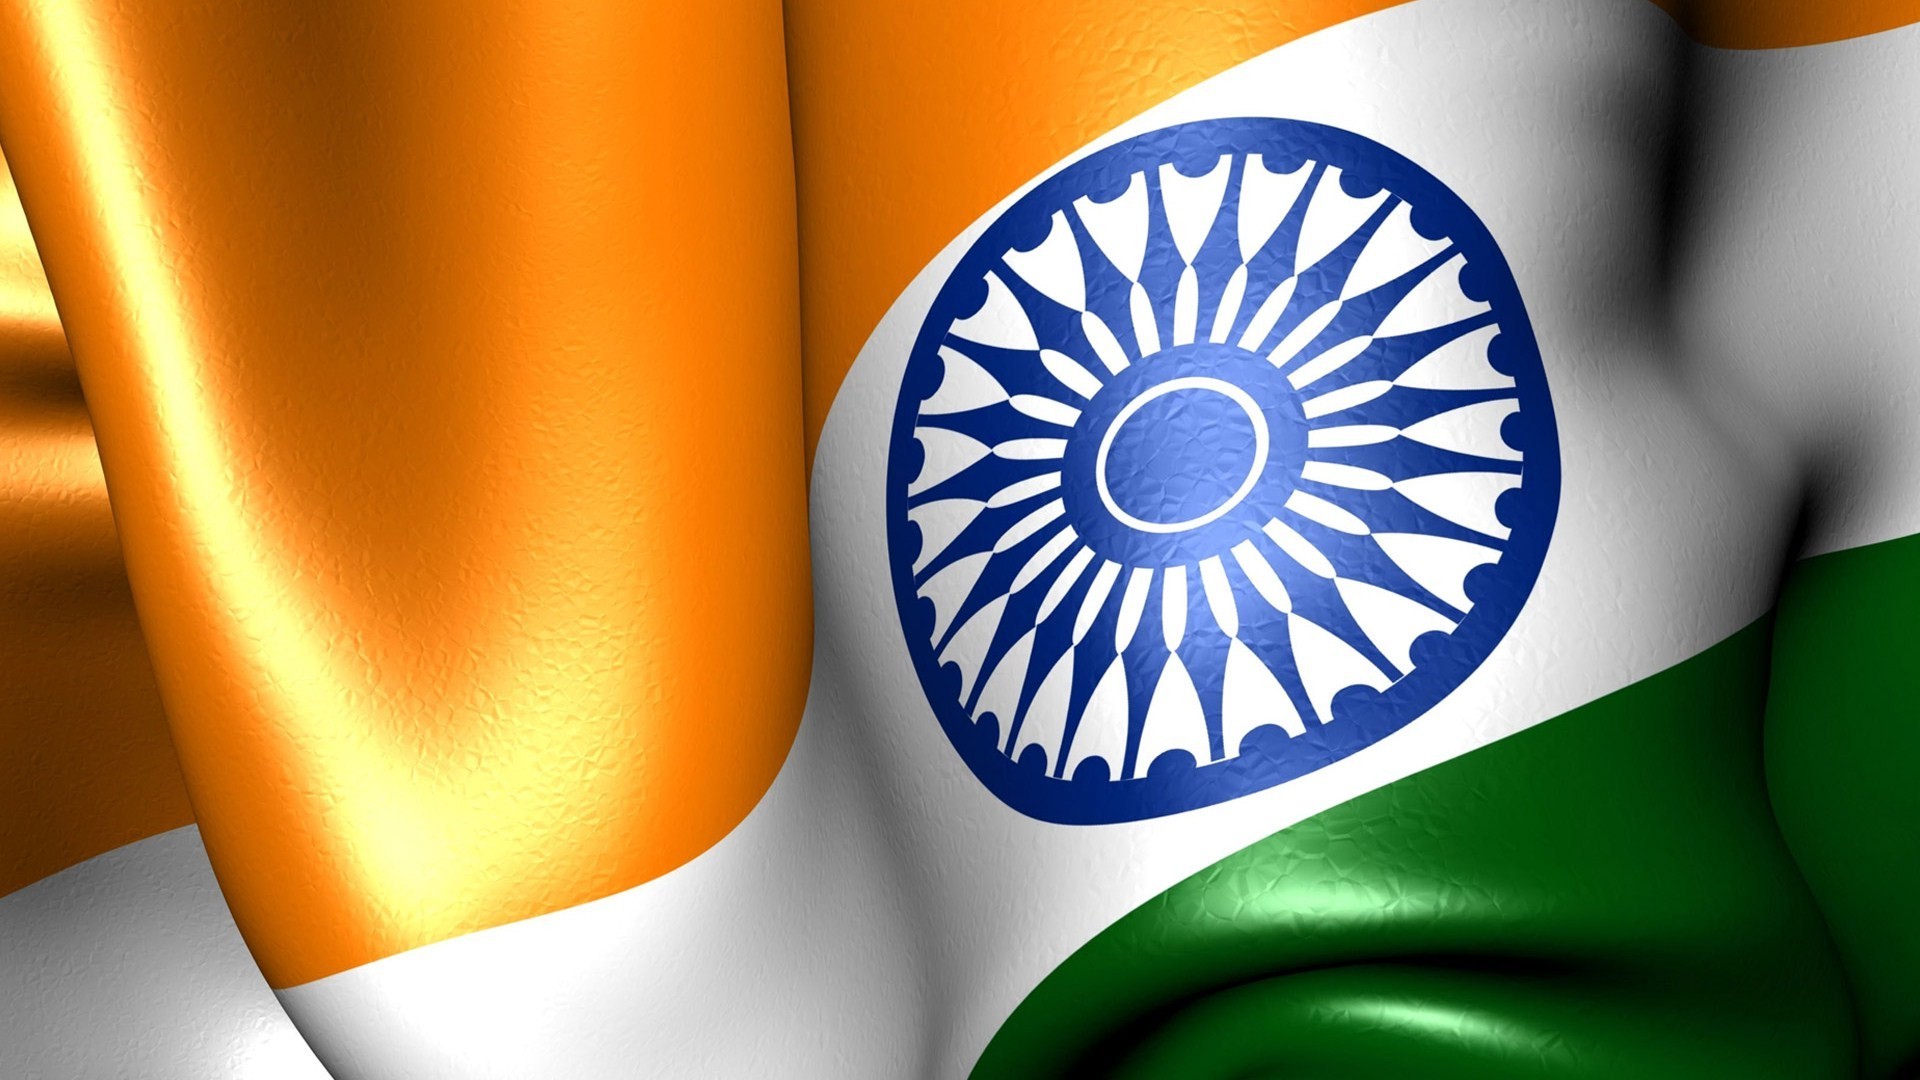 1920x1080 beautiful-indian-flag-hd-wallpaper.jpg (1920Ã1080) | India | Pinterest | Indian  flag pictures, Indian flag and Hd images